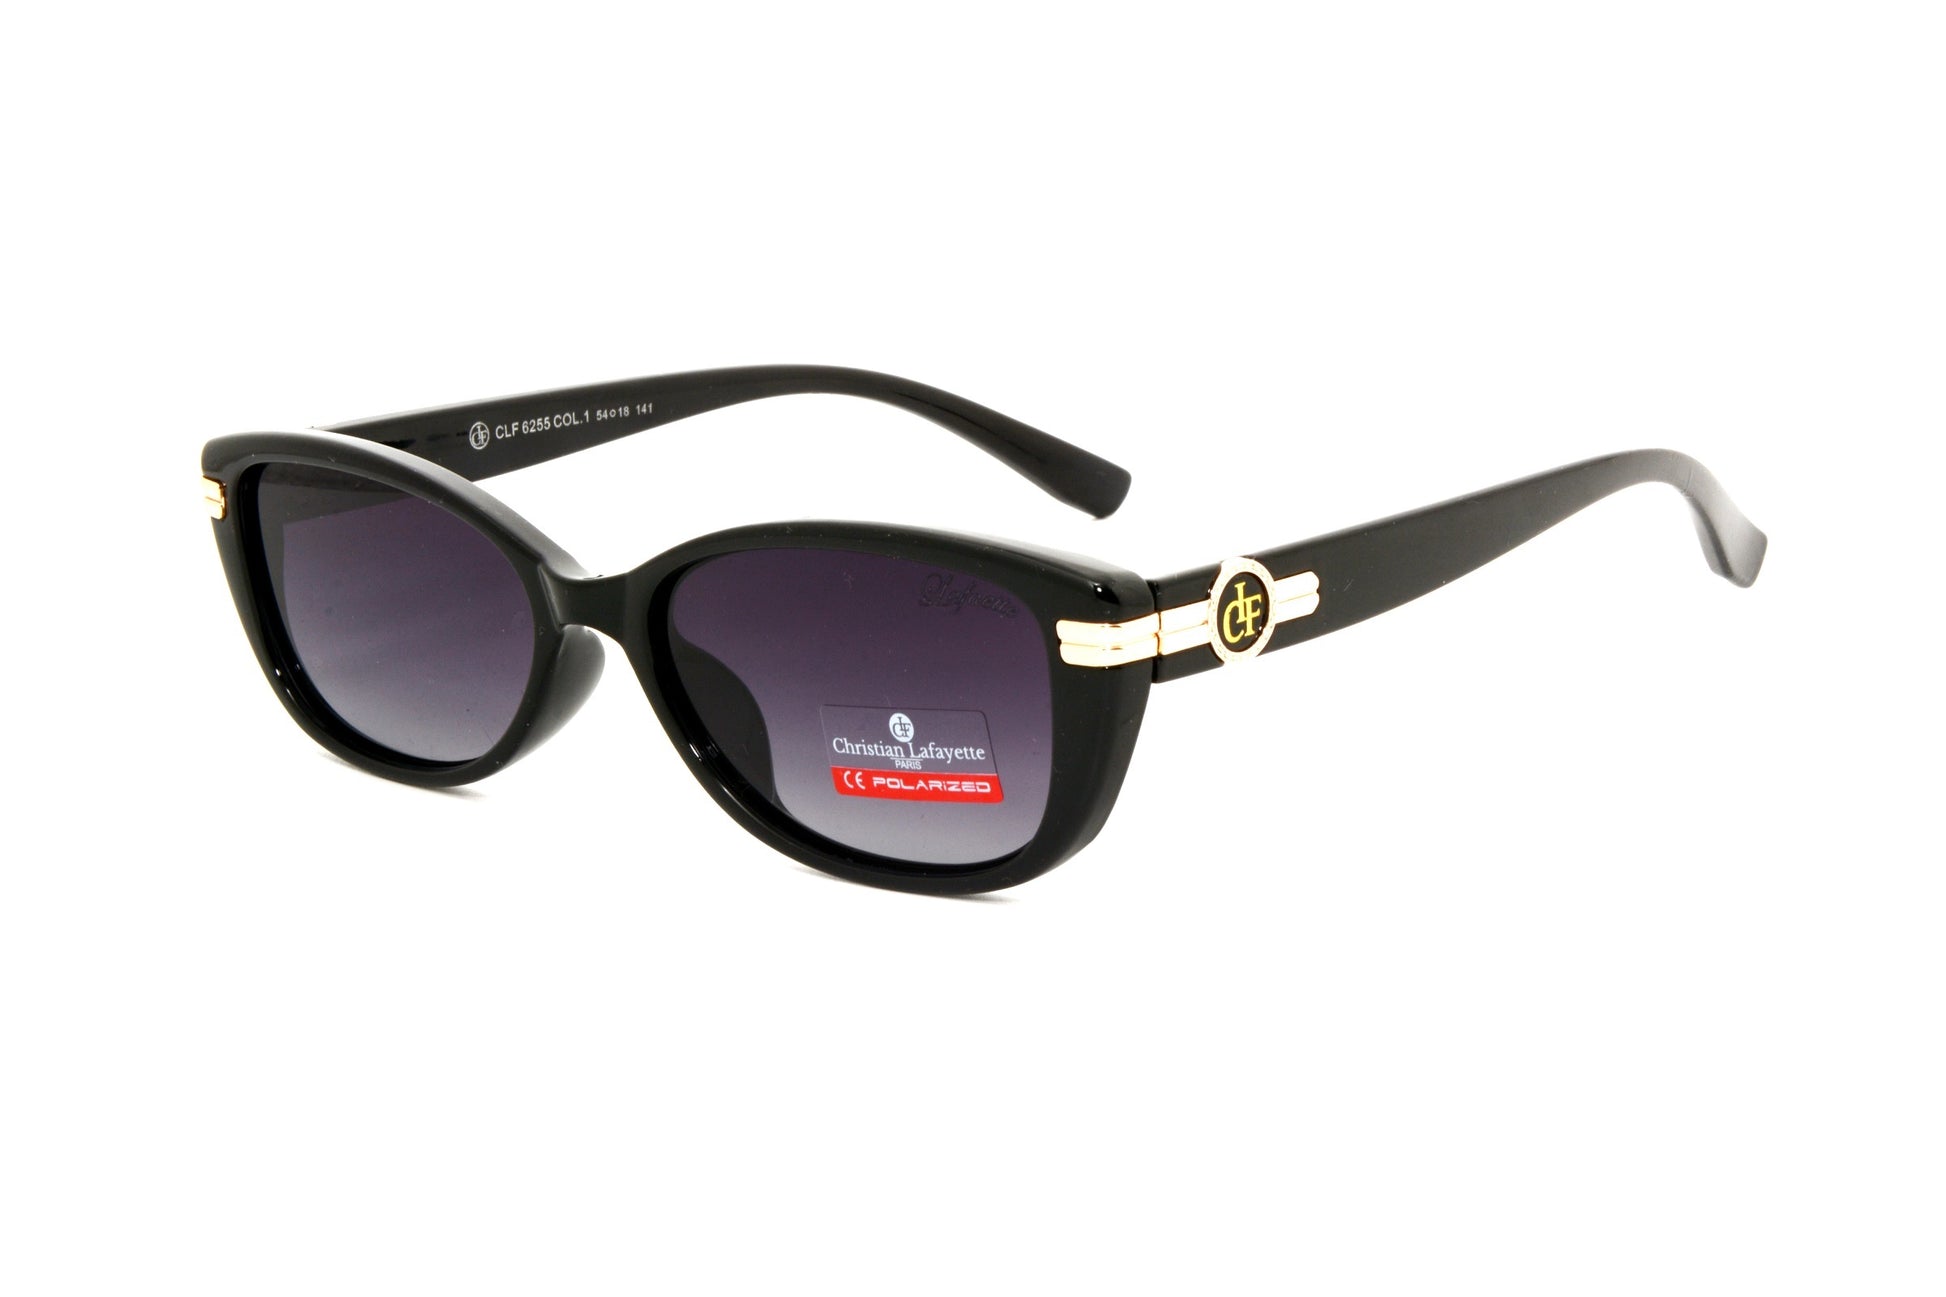 Christian Lafayette sunglasses Clf 6255 C1